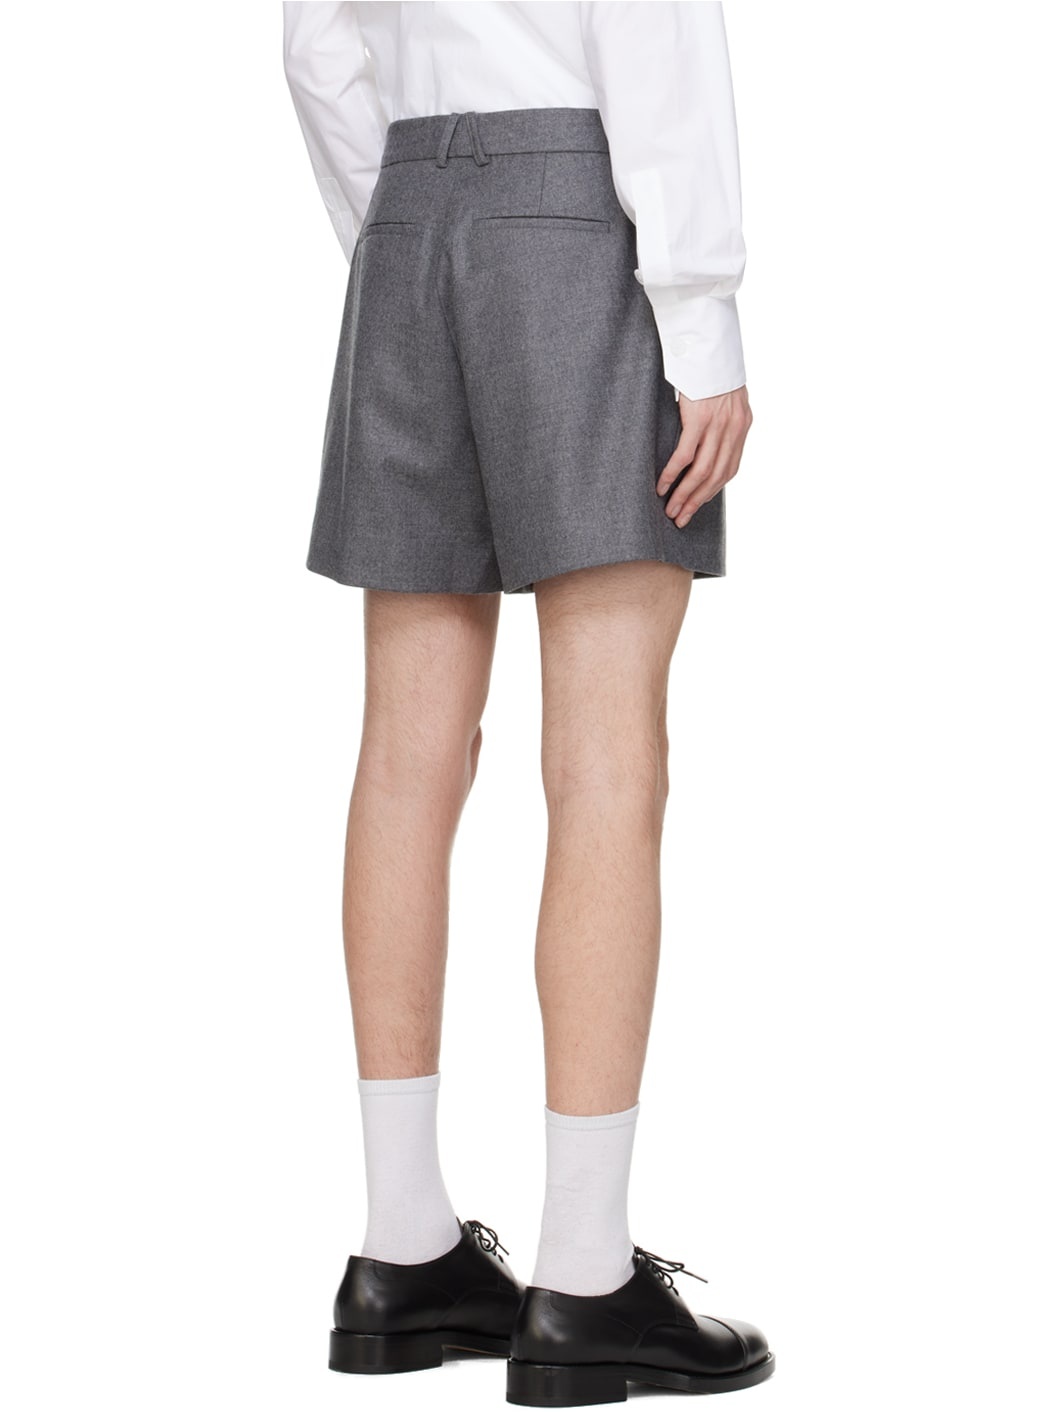 SSENSE Exclusive Gray Atero Shorts - 3